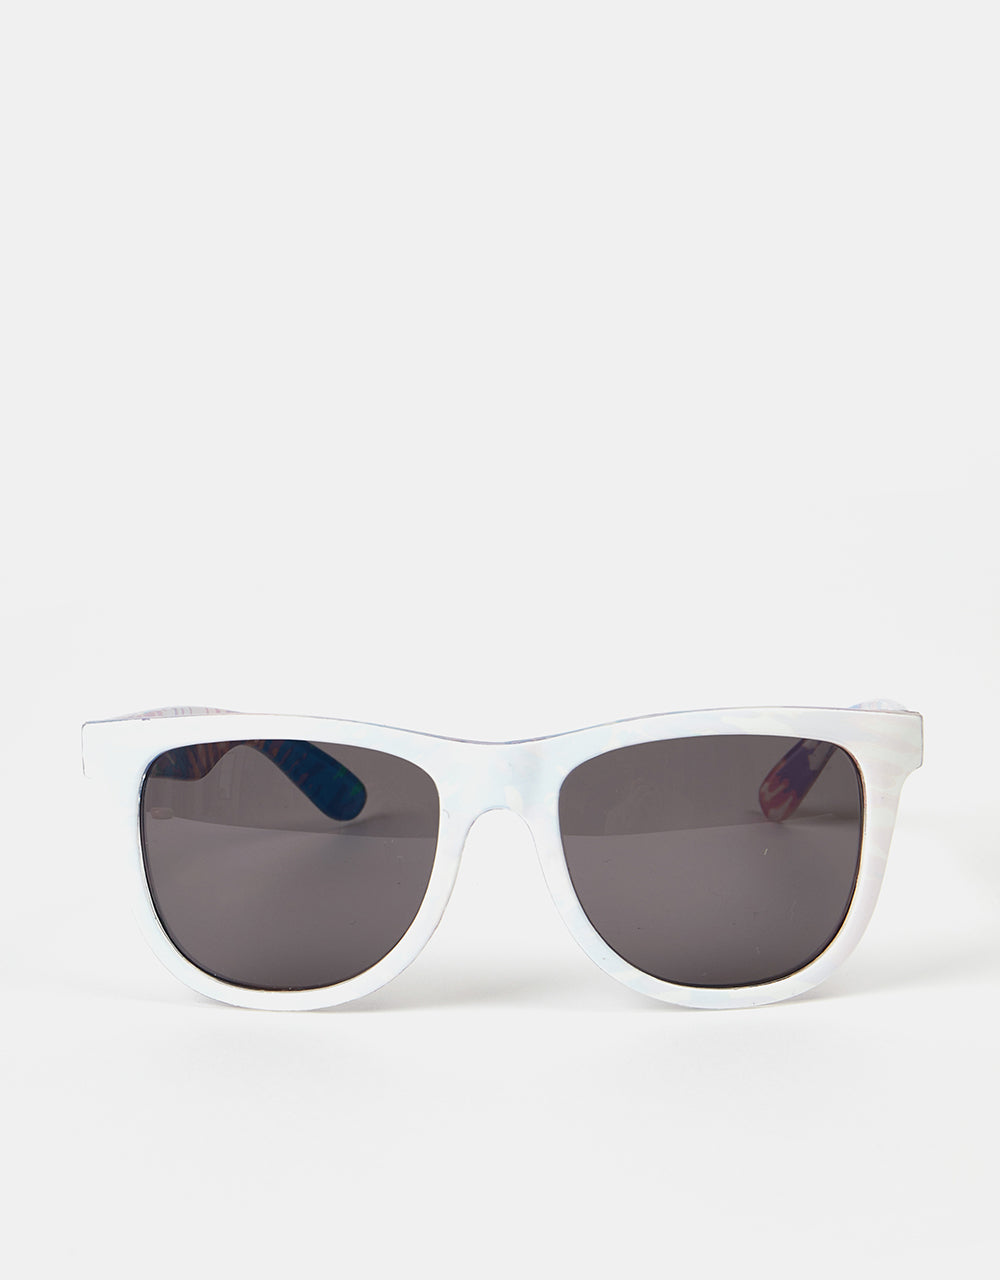 Santa Cruz Tie Dye Hand Sunglasses - White